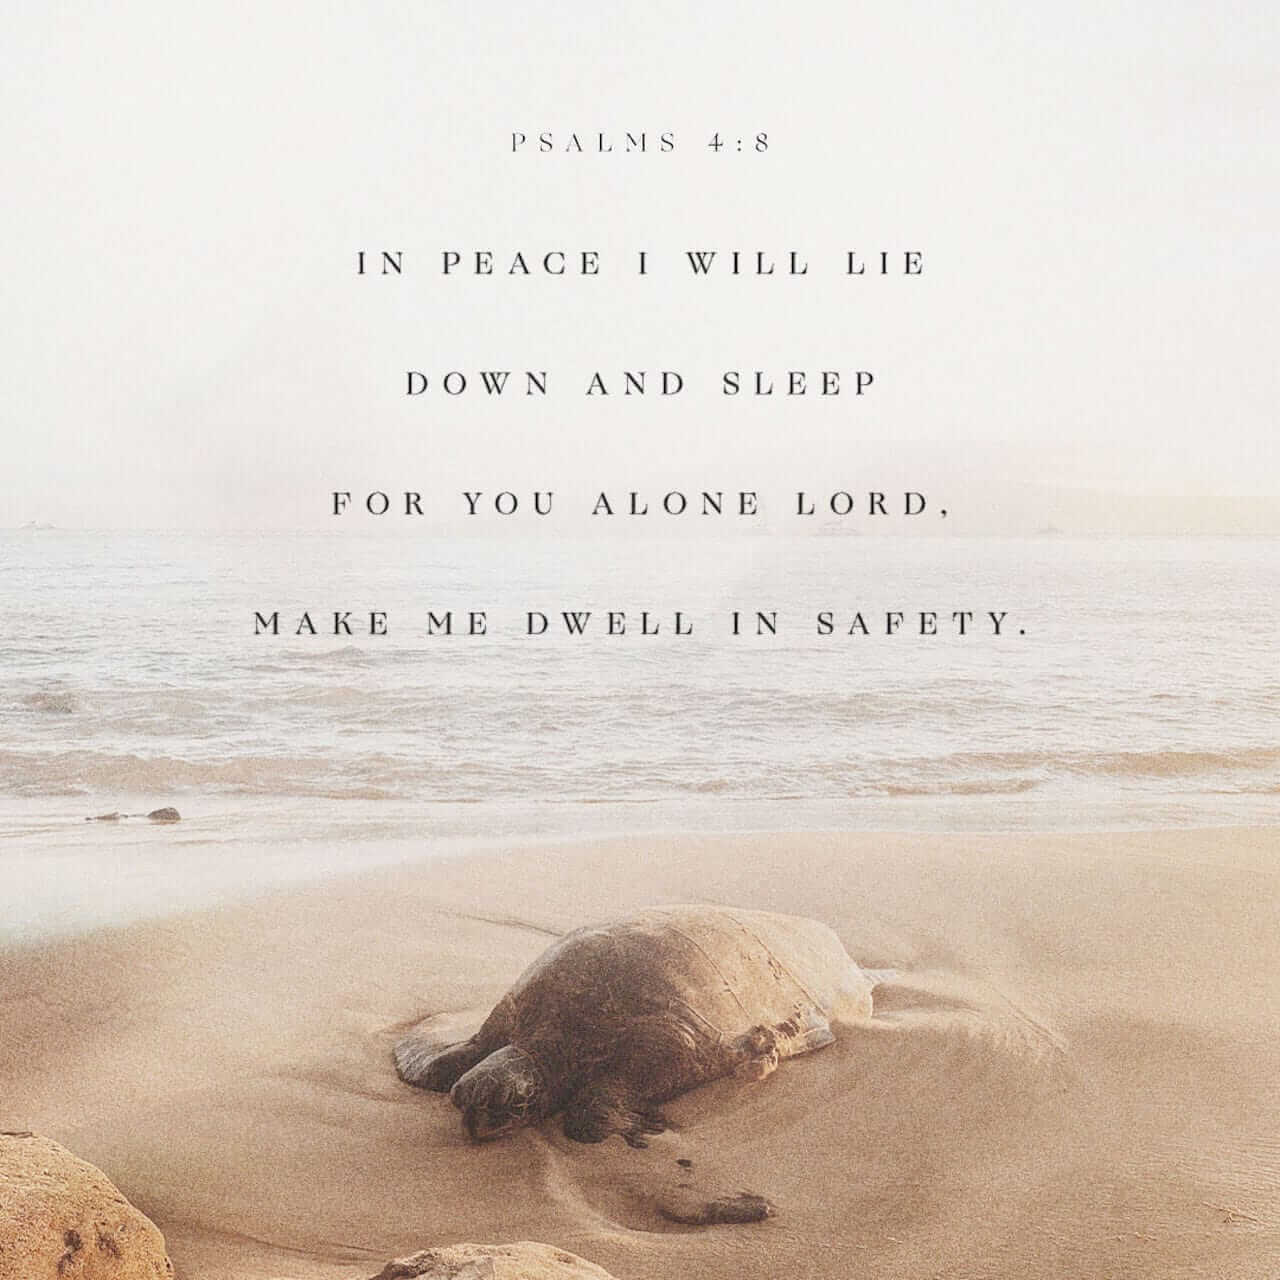 Receive God's peace